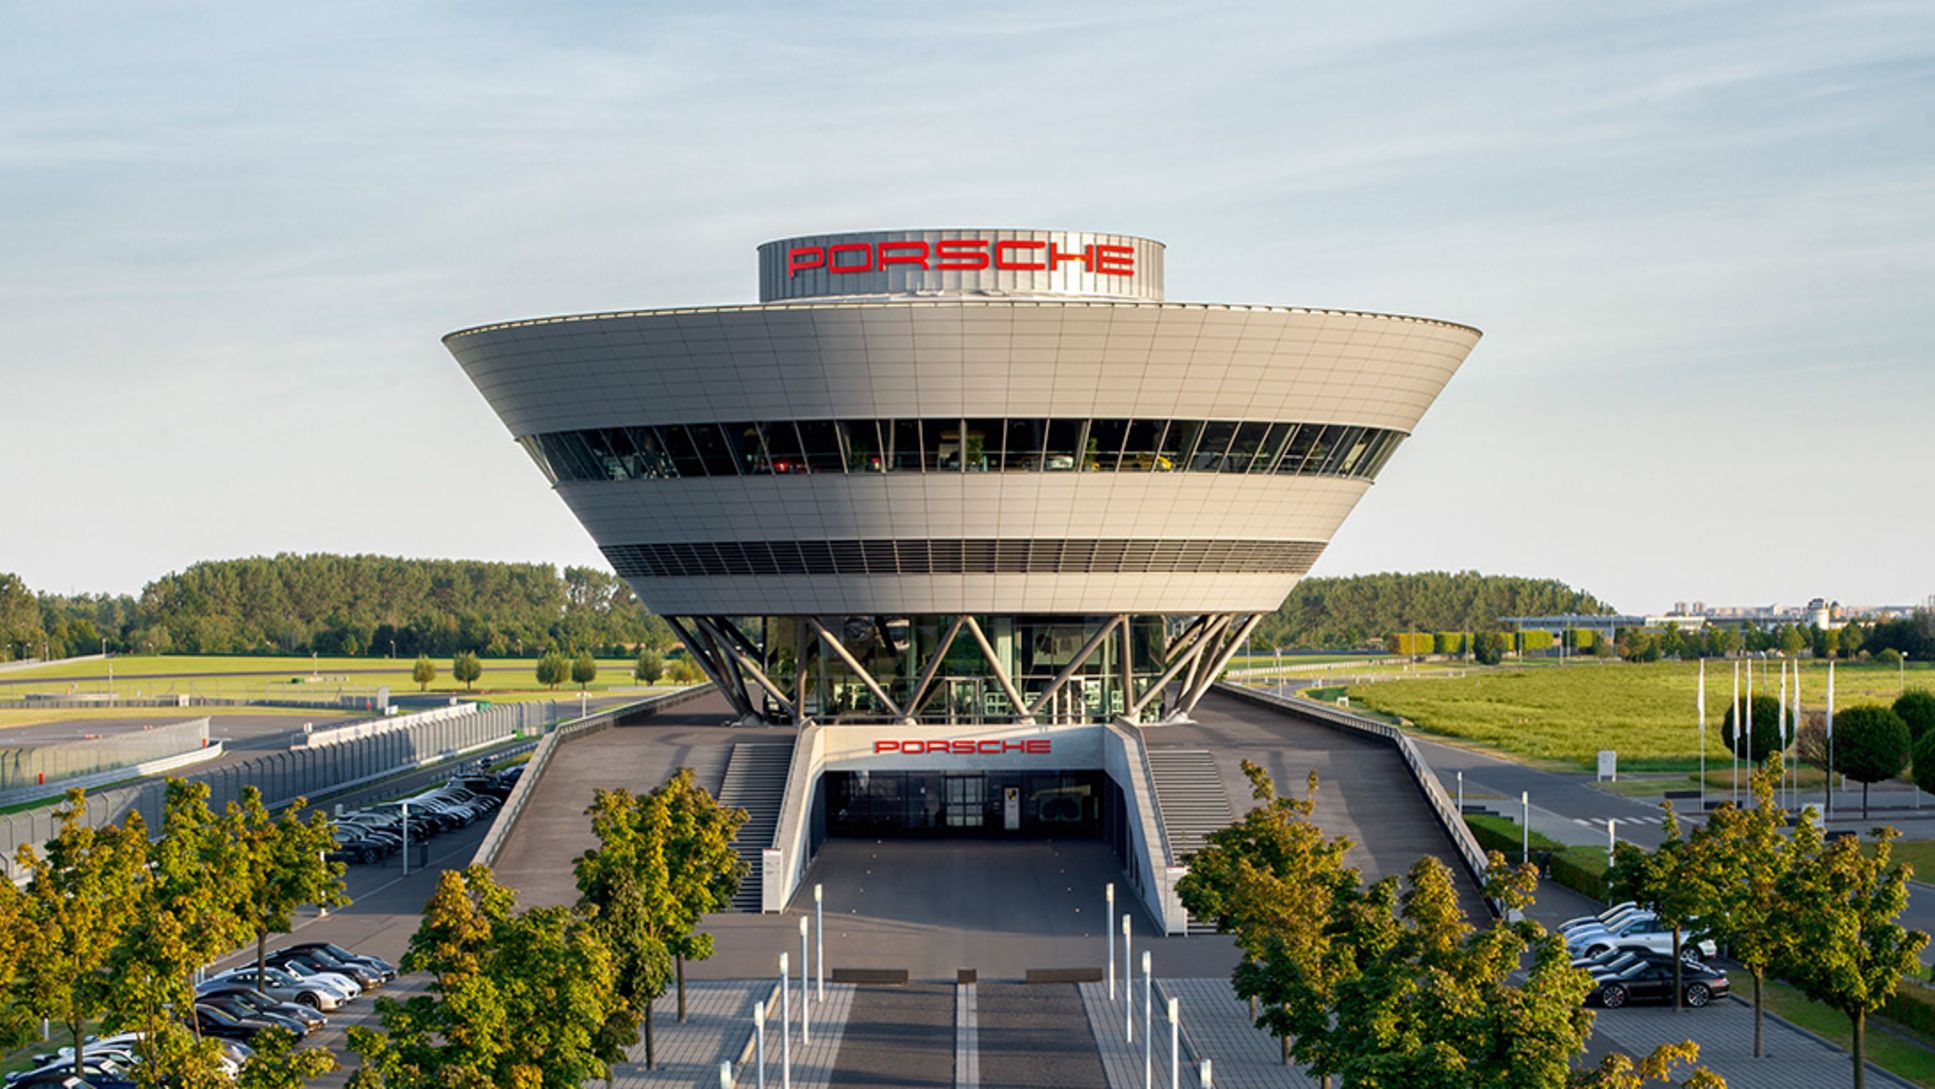 Location Leipzig, 2019, Porsche AG